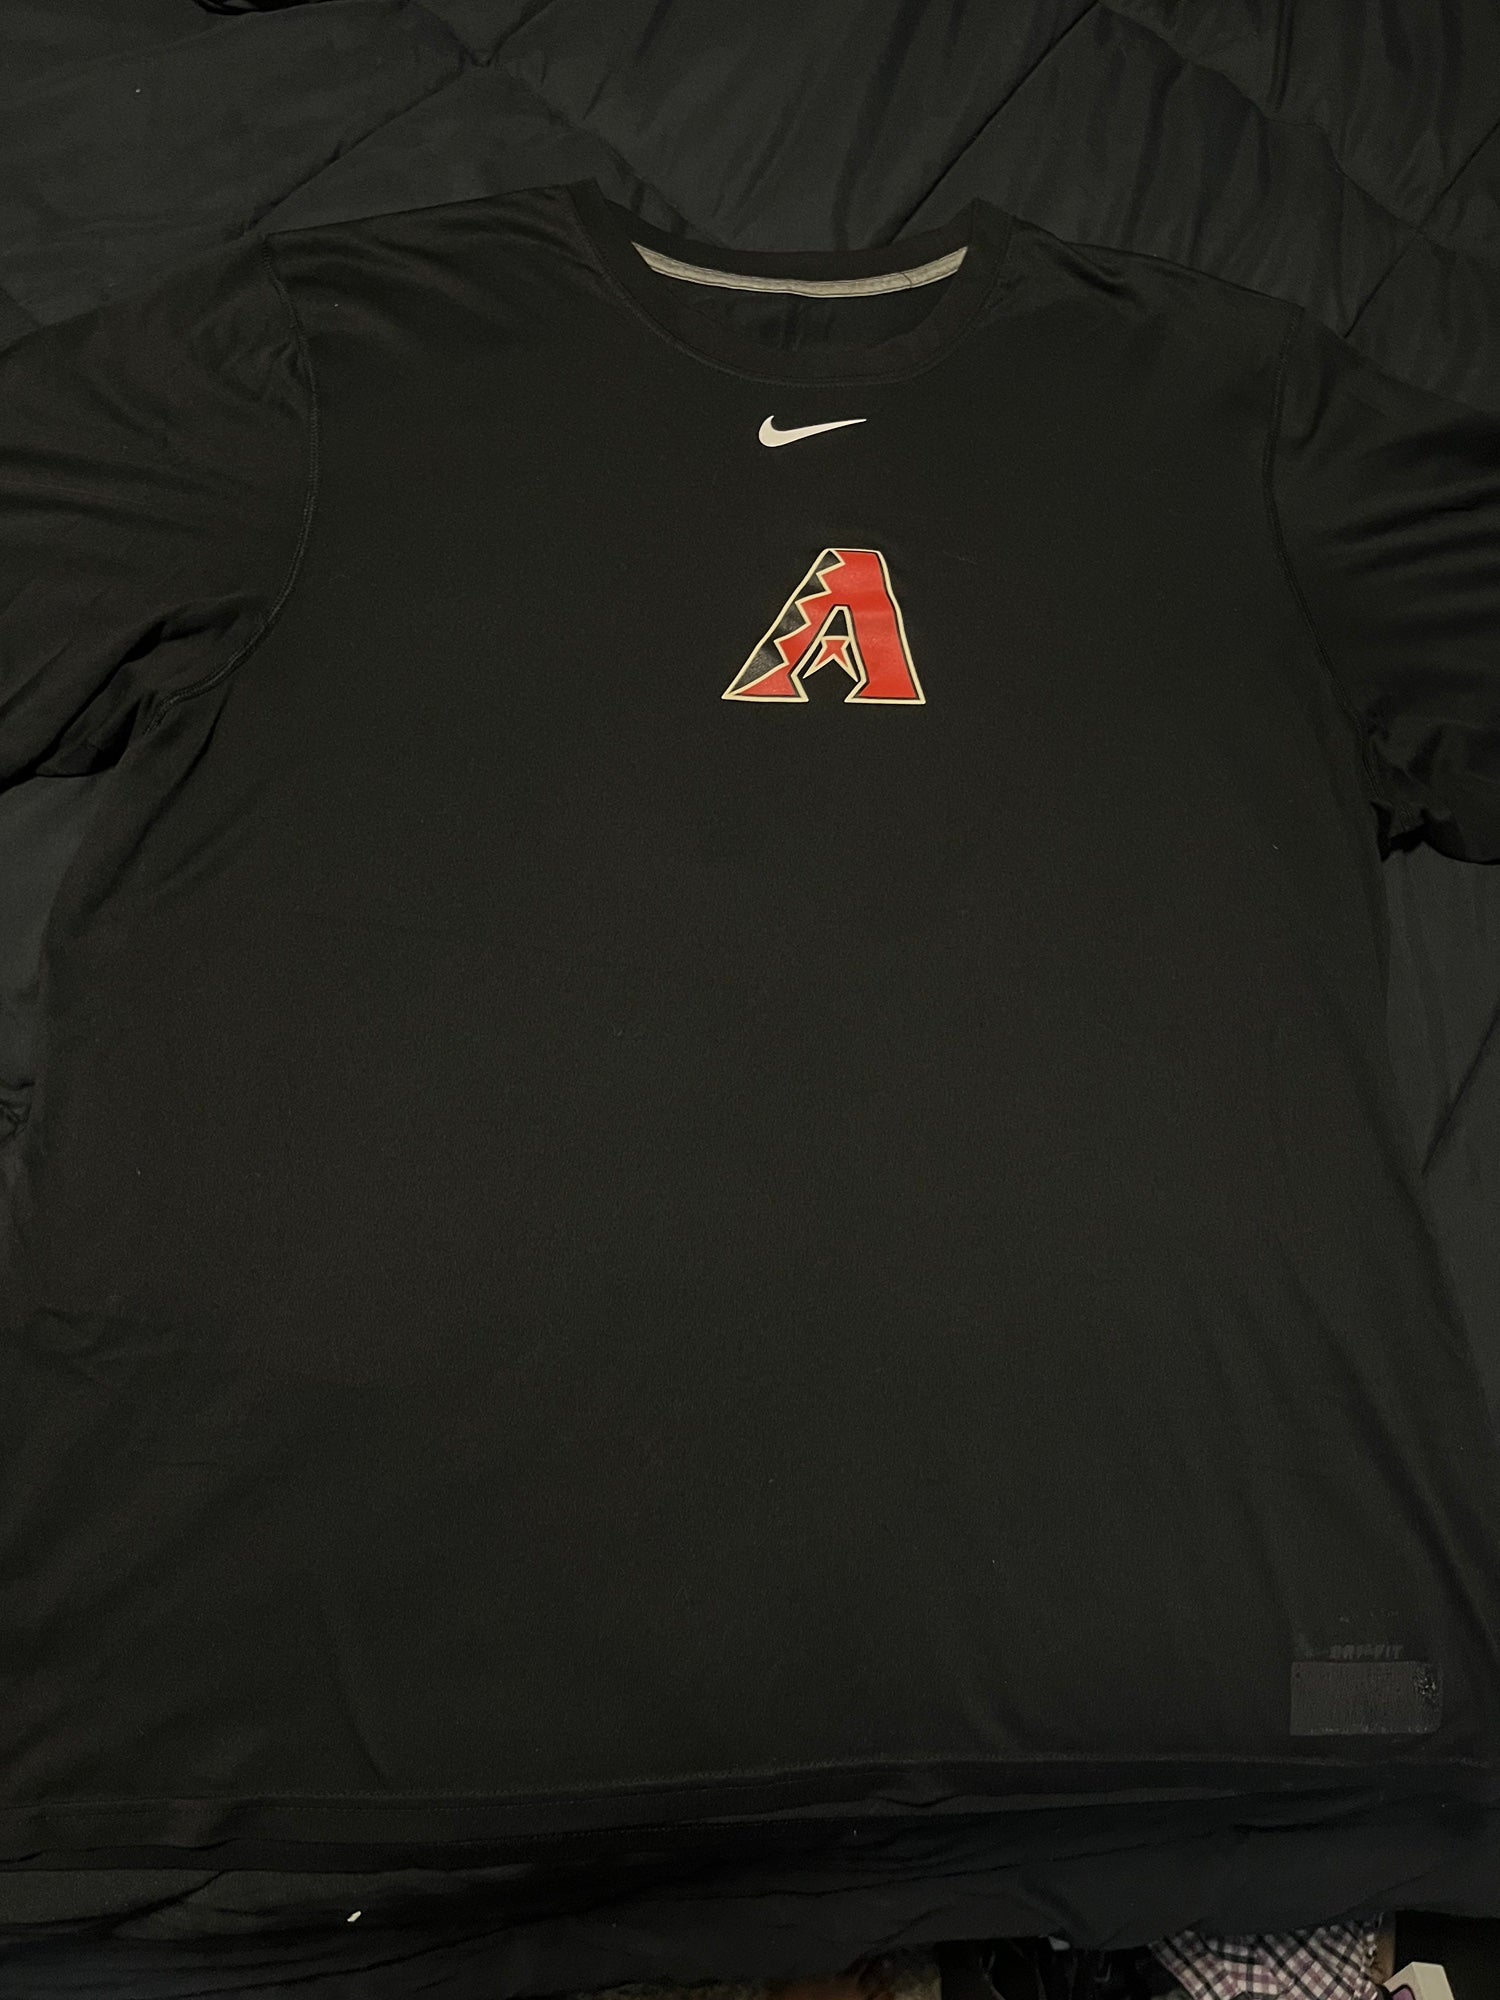 Nike Arizona Diamondbacks MLB Jerseys for sale